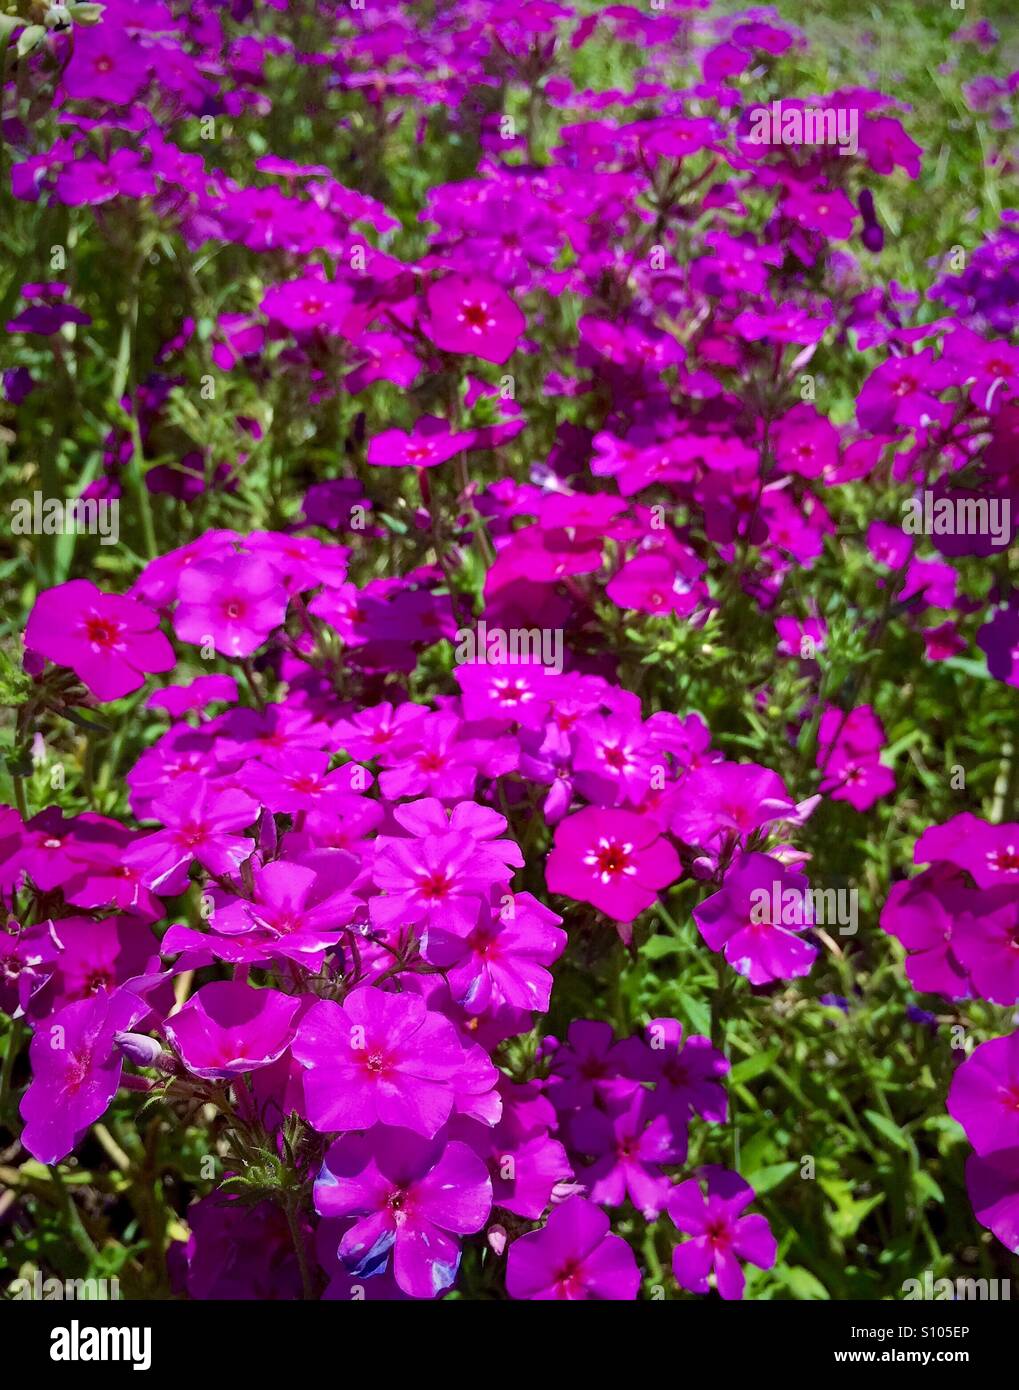 Pink Phlox blooming in a green field, Phlox drummondii Stock Photo